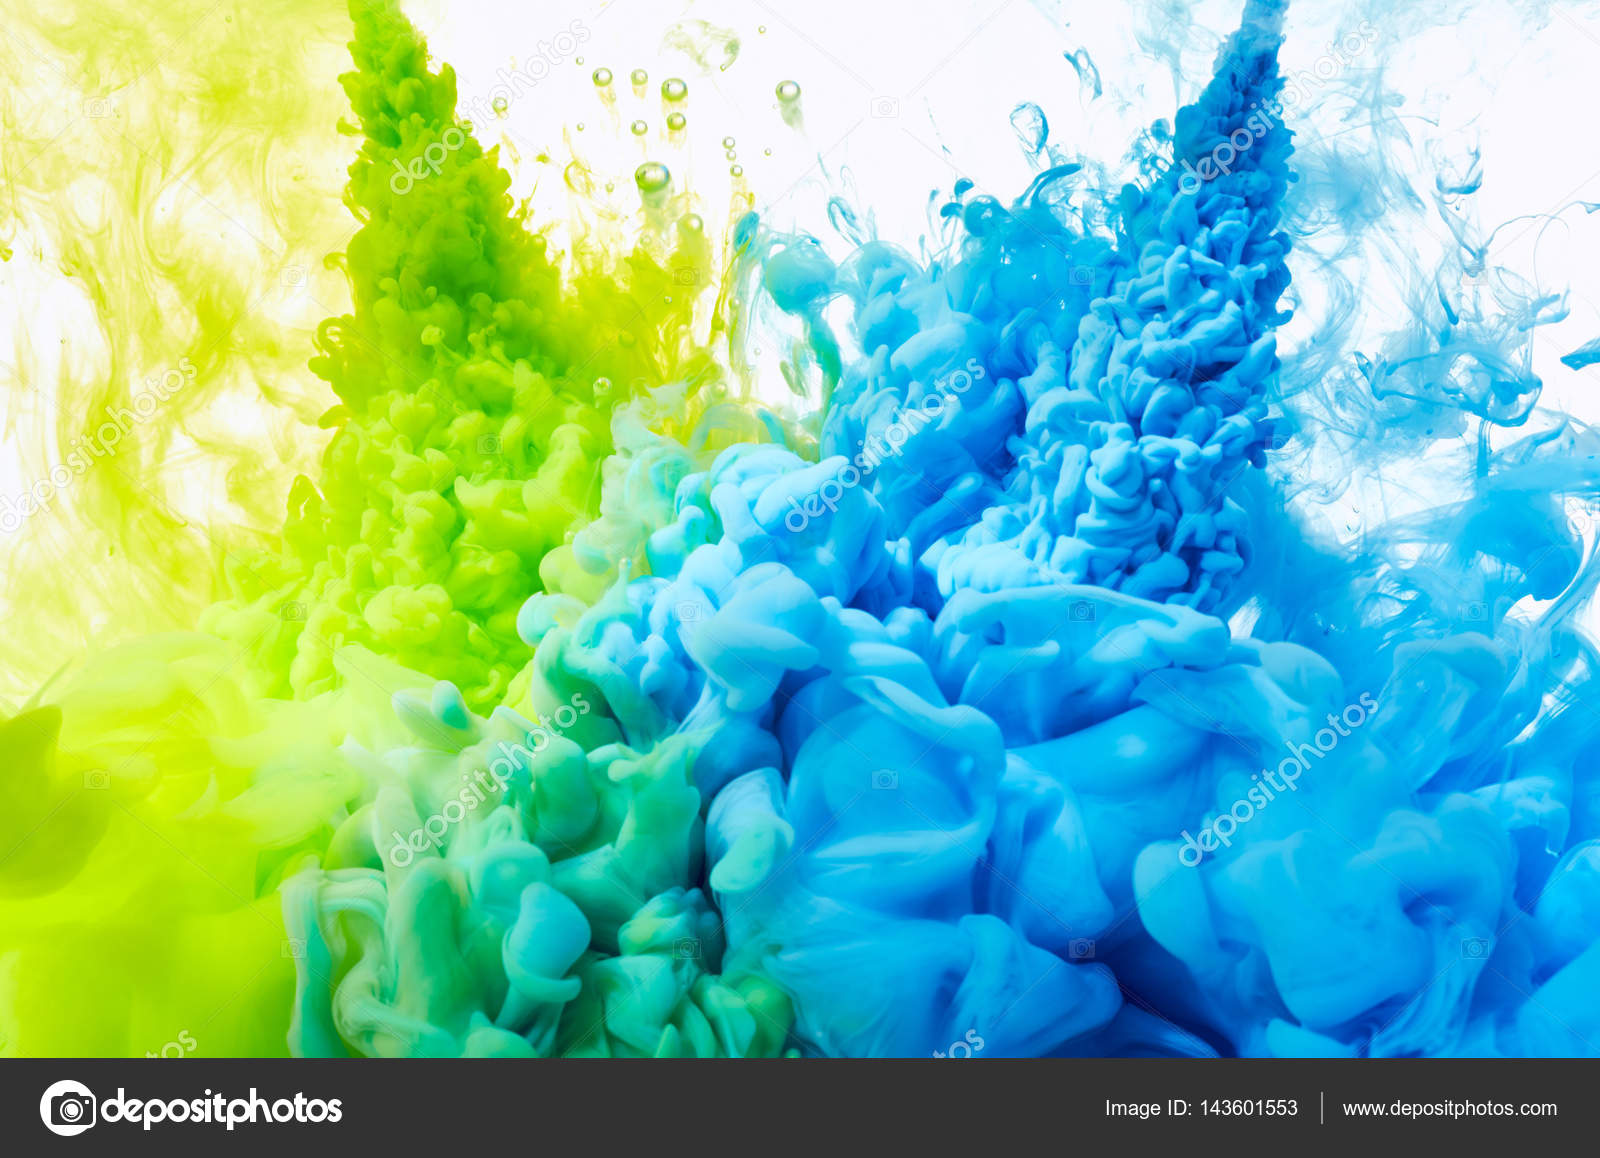 Blue And White Paint Splash On White Background Stock Photo